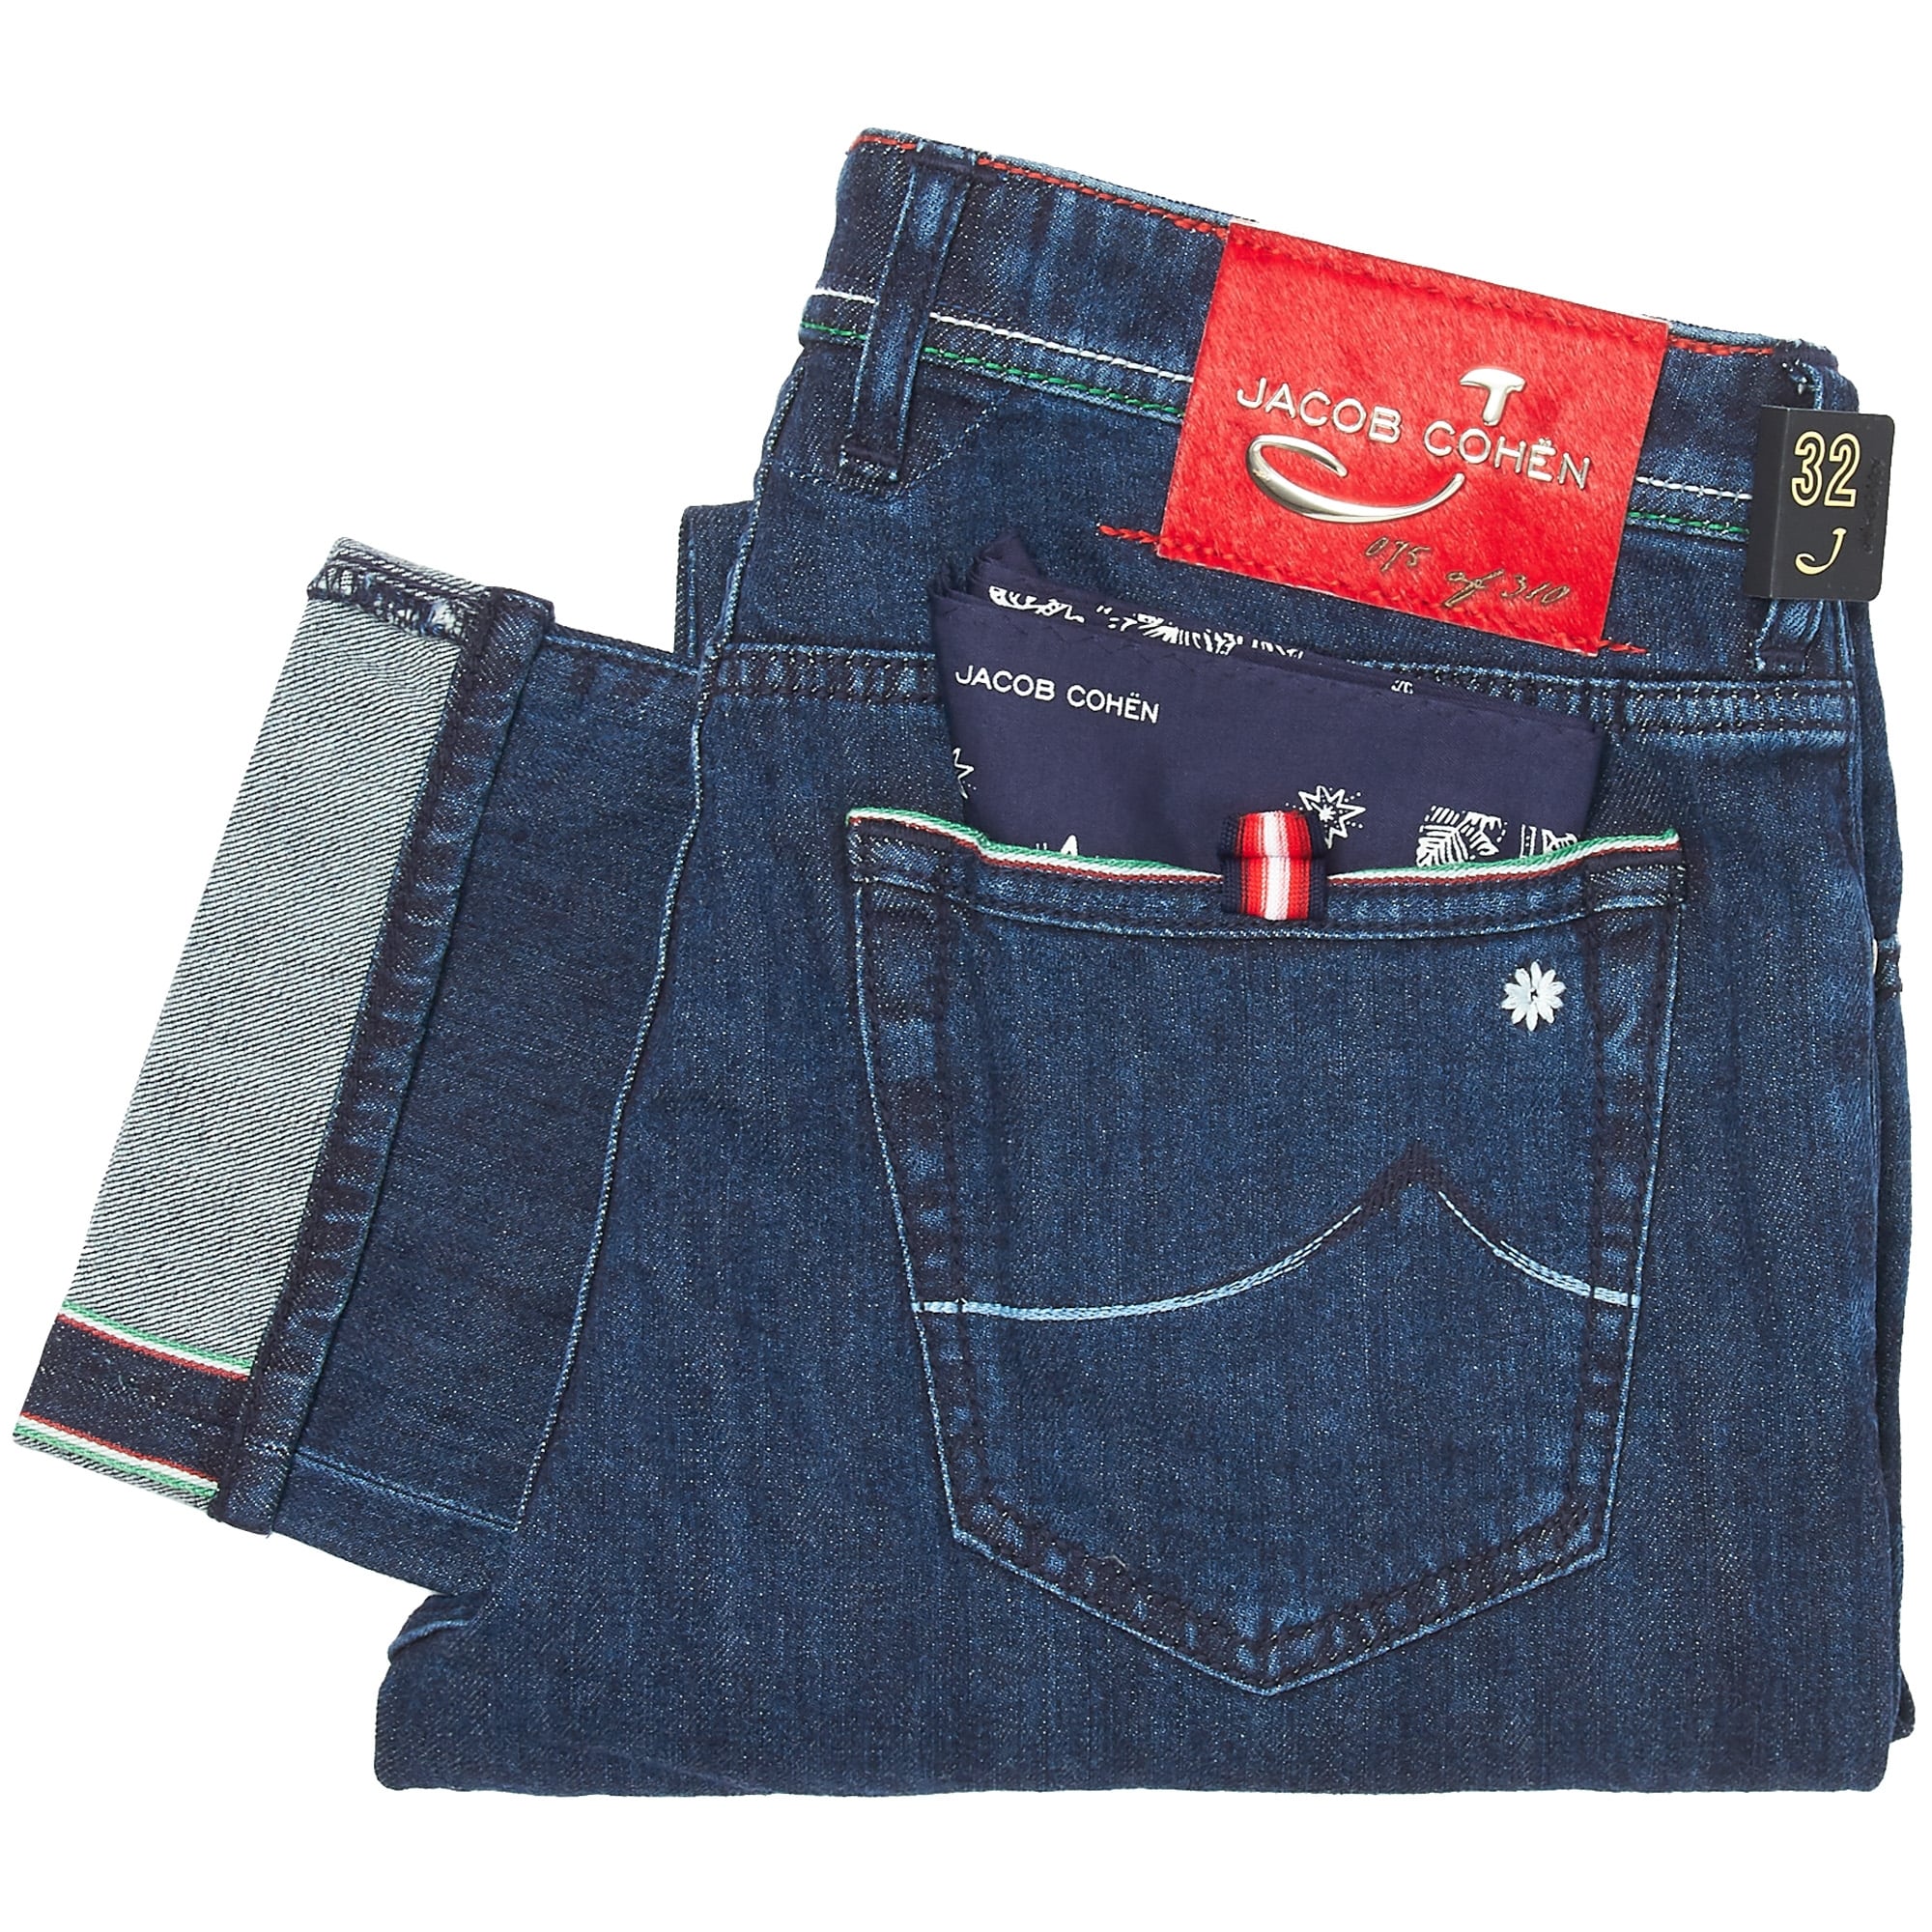 JACOB COHEN JEANS denim j688 limited edition comfort jeans HLCFNAC